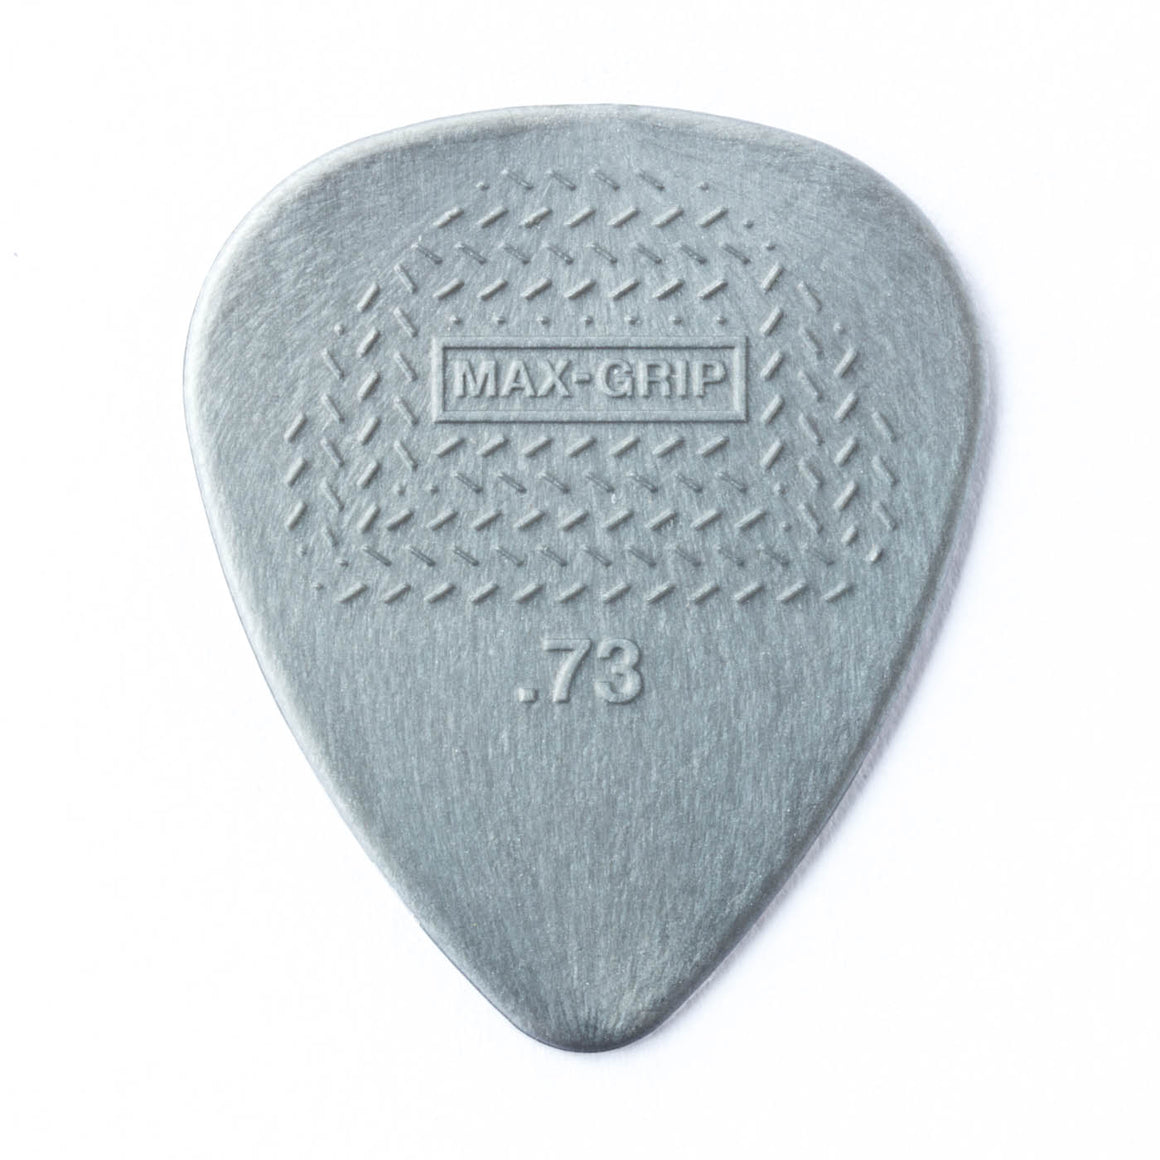 DUNLOP 449P73 .73 Max Grip Guitar Picks (12 pk)